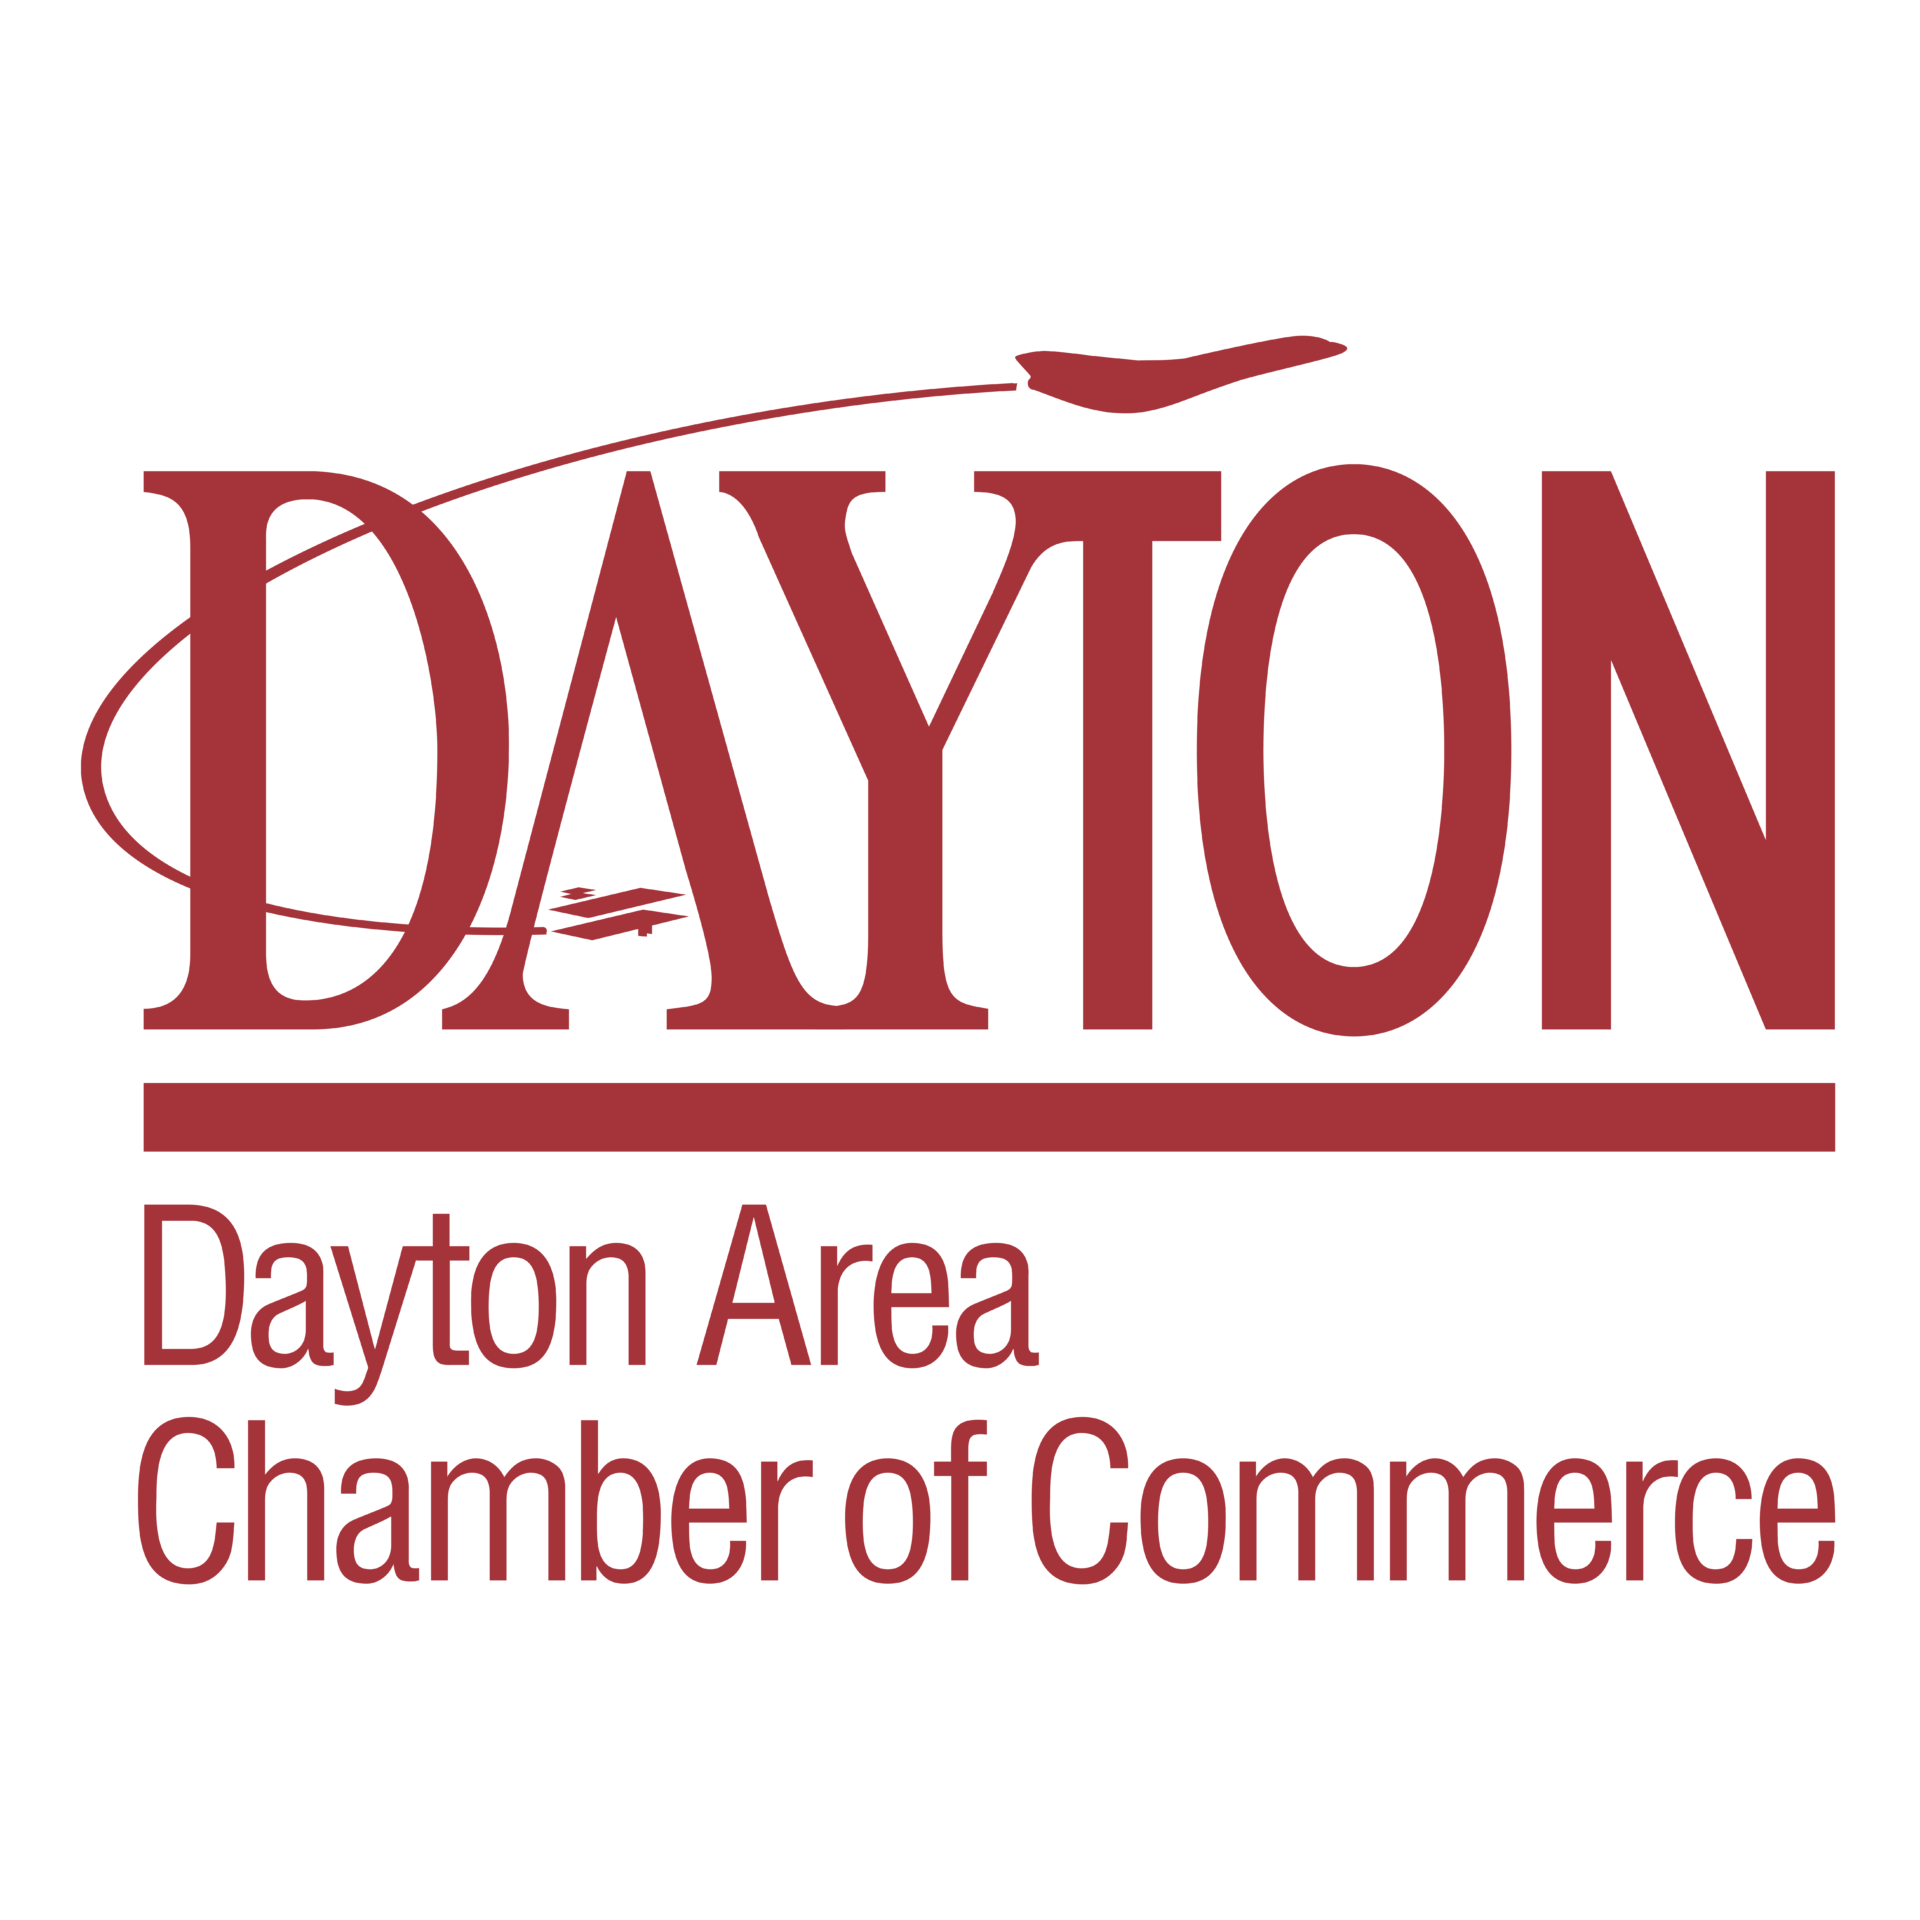 Dayton Area Chamber of Commerce